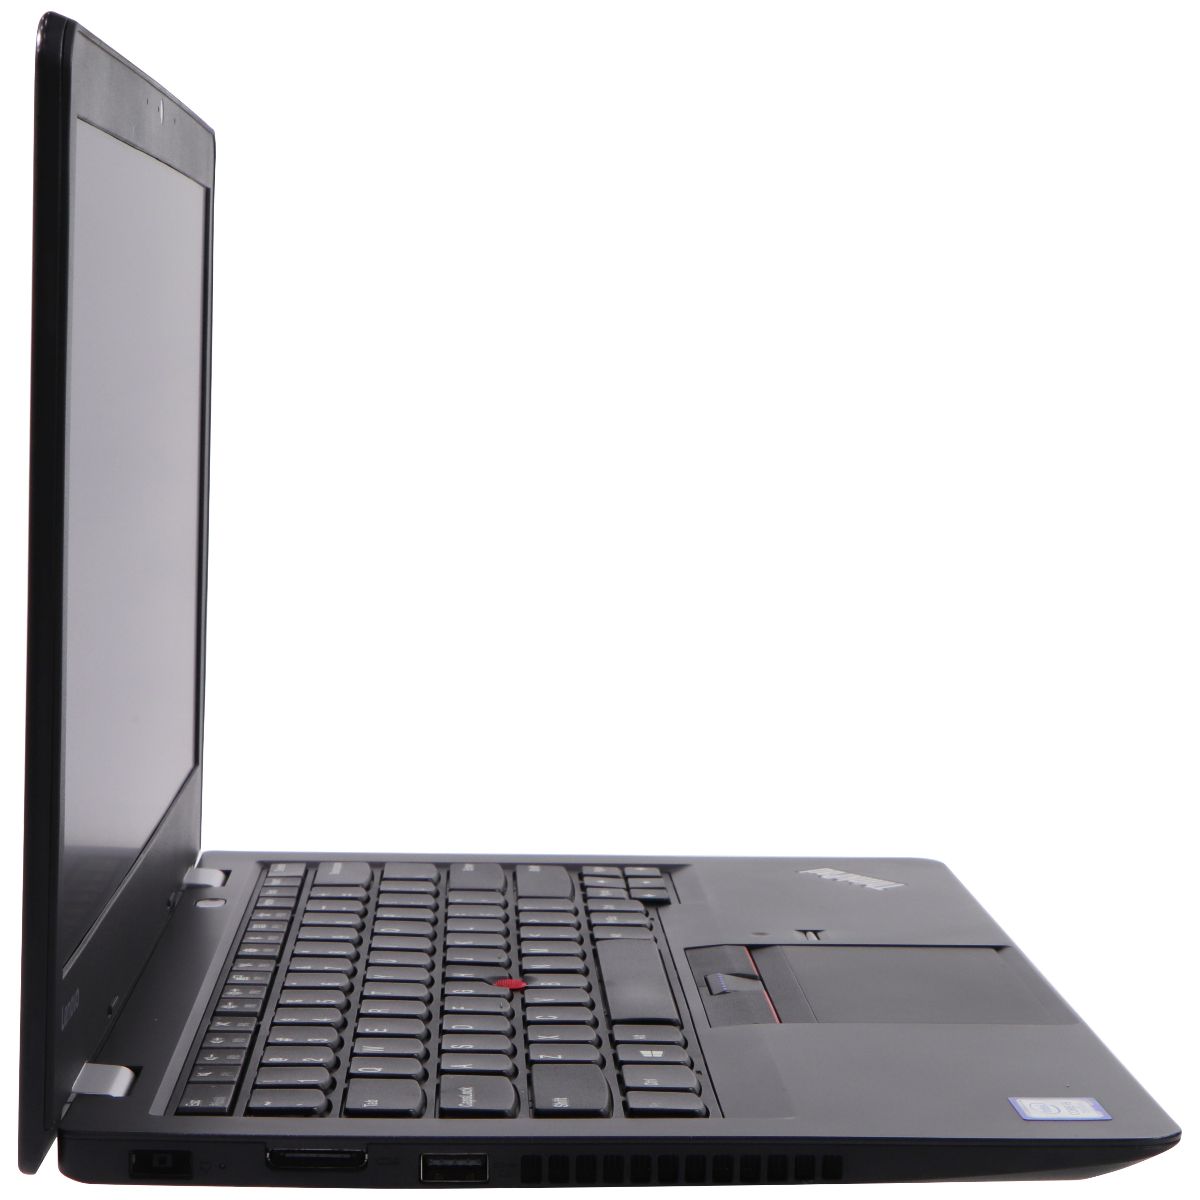 Lenovo Thinkpad 13 (2nd Gen) Laptop 20J1-000EUS i5-7200U/256GB/16GB RAM/10 Home Laptops - PC Laptops & Netbooks Lenovo    - Simple Cell Bulk Wholesale Pricing - USA Seller